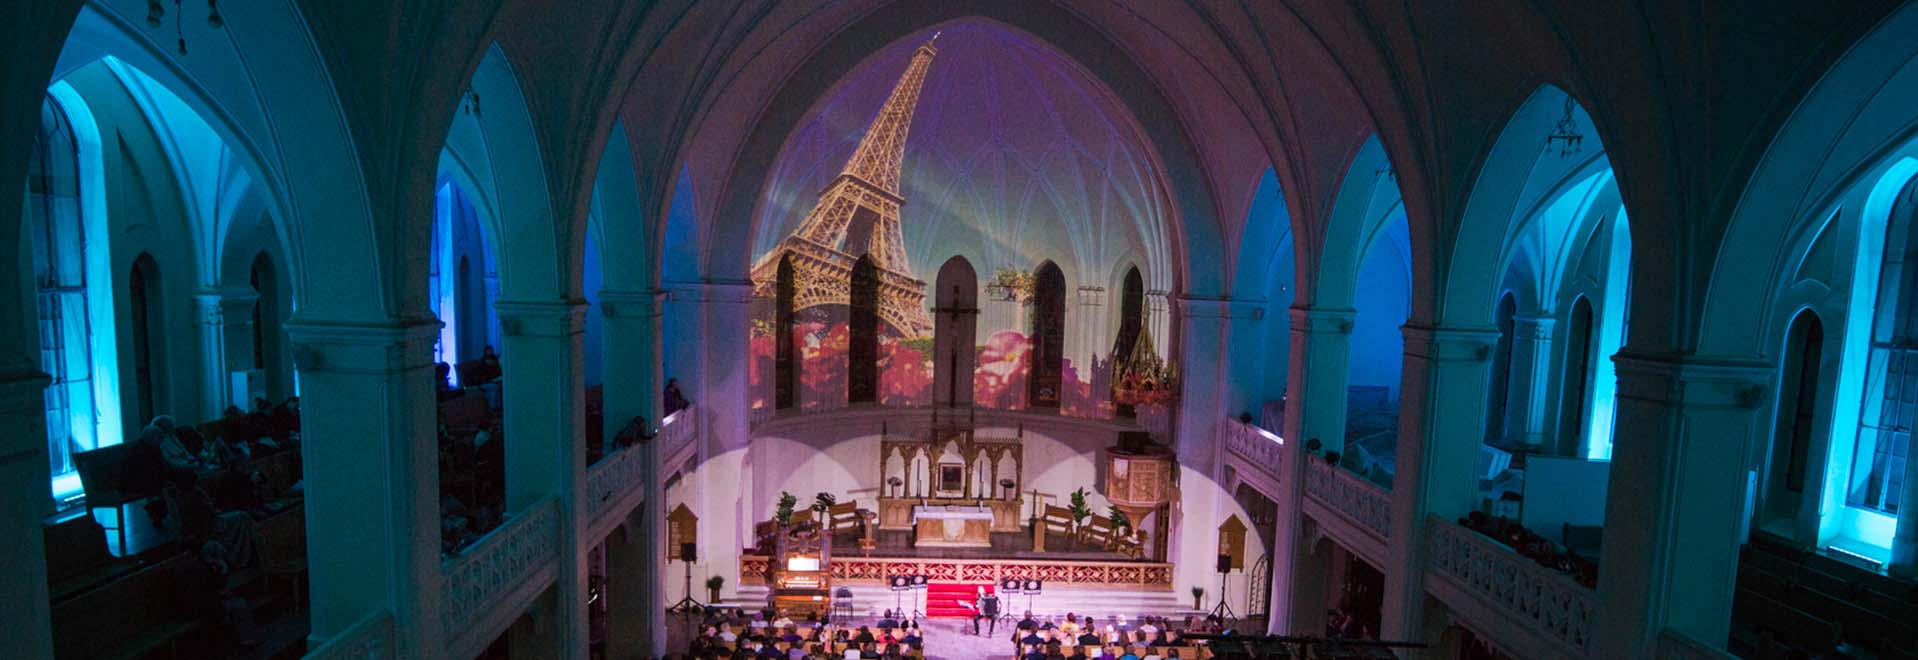 Романтический вечер в Париже. Орган, оркестр скрипка.